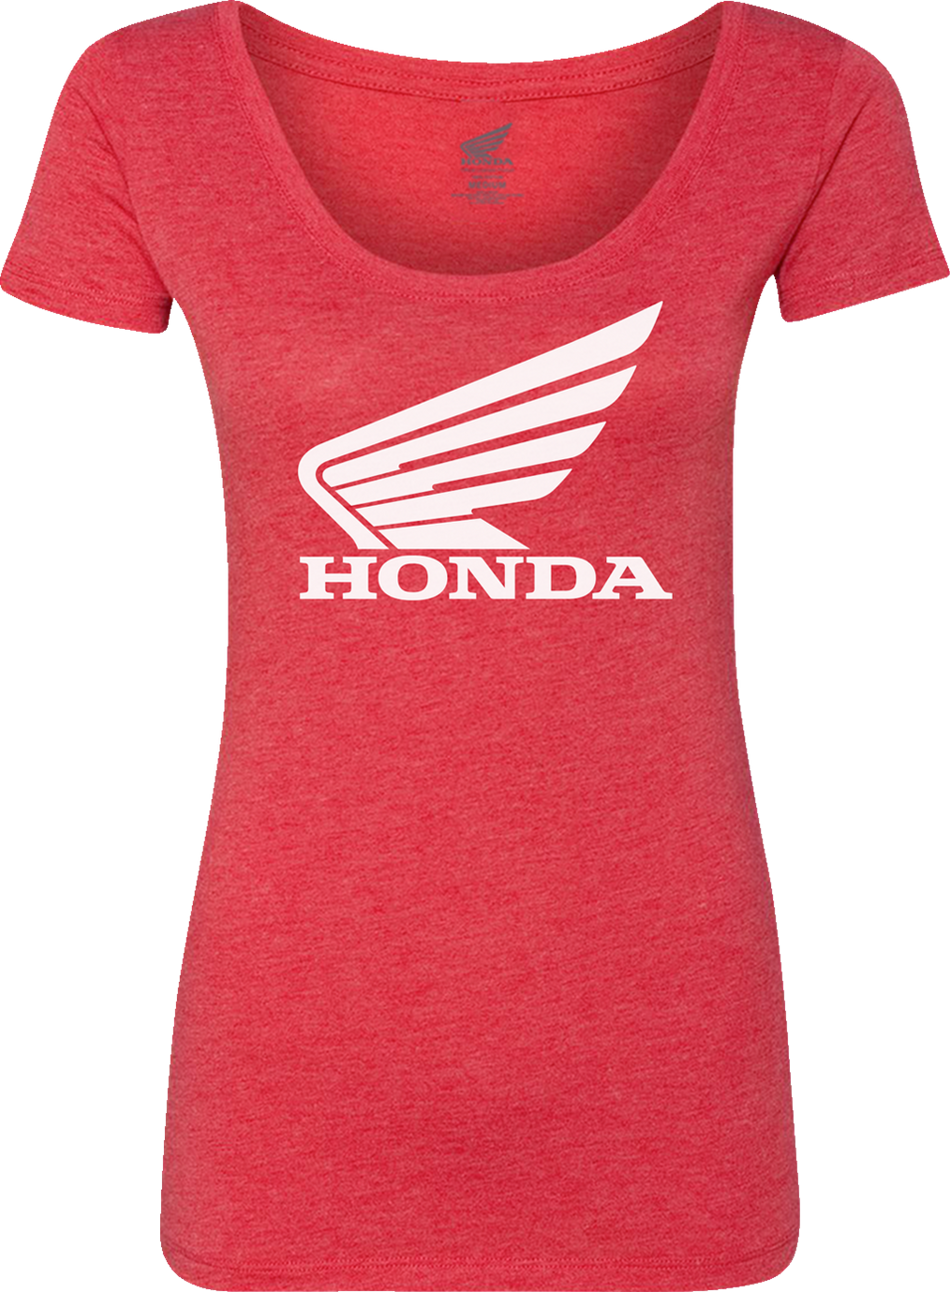 HONDA APPAREL Women's Honda Wing T-Shirt - Red - Large NP21S-L3029-L